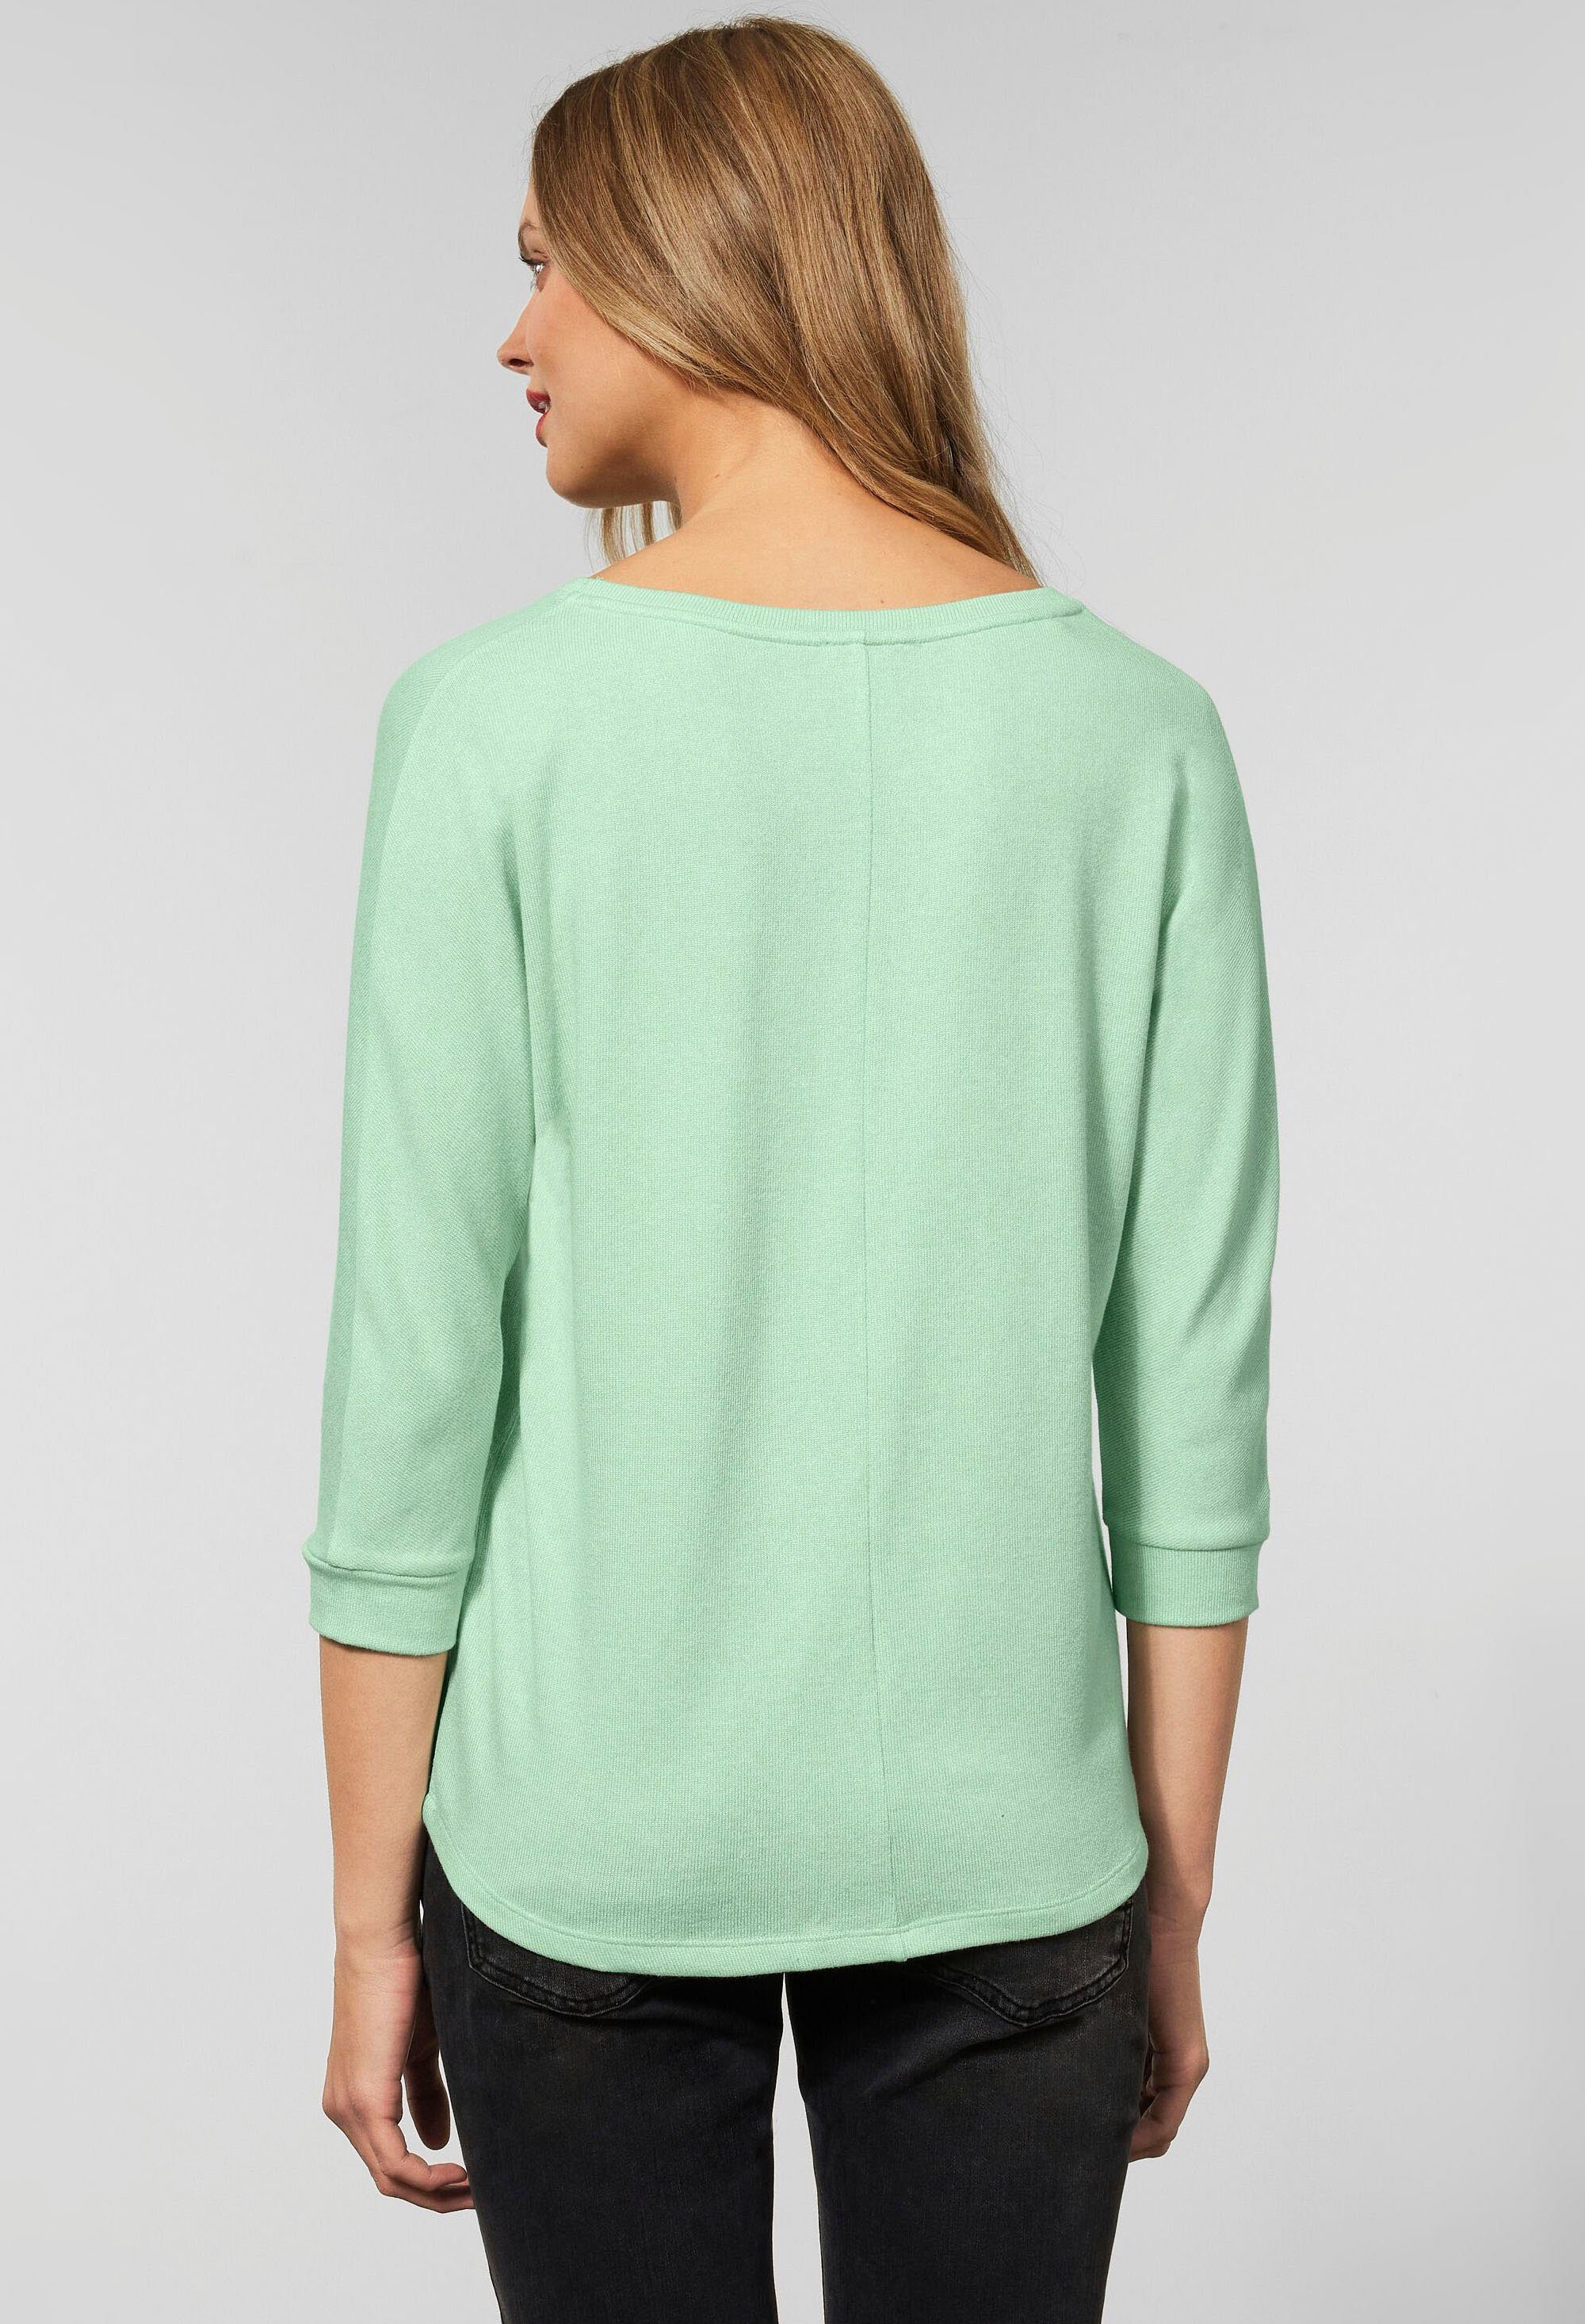 mint Style Ellen STREET in 3/4-Arm-Shirt clary Melange-Optik ONE melange soft